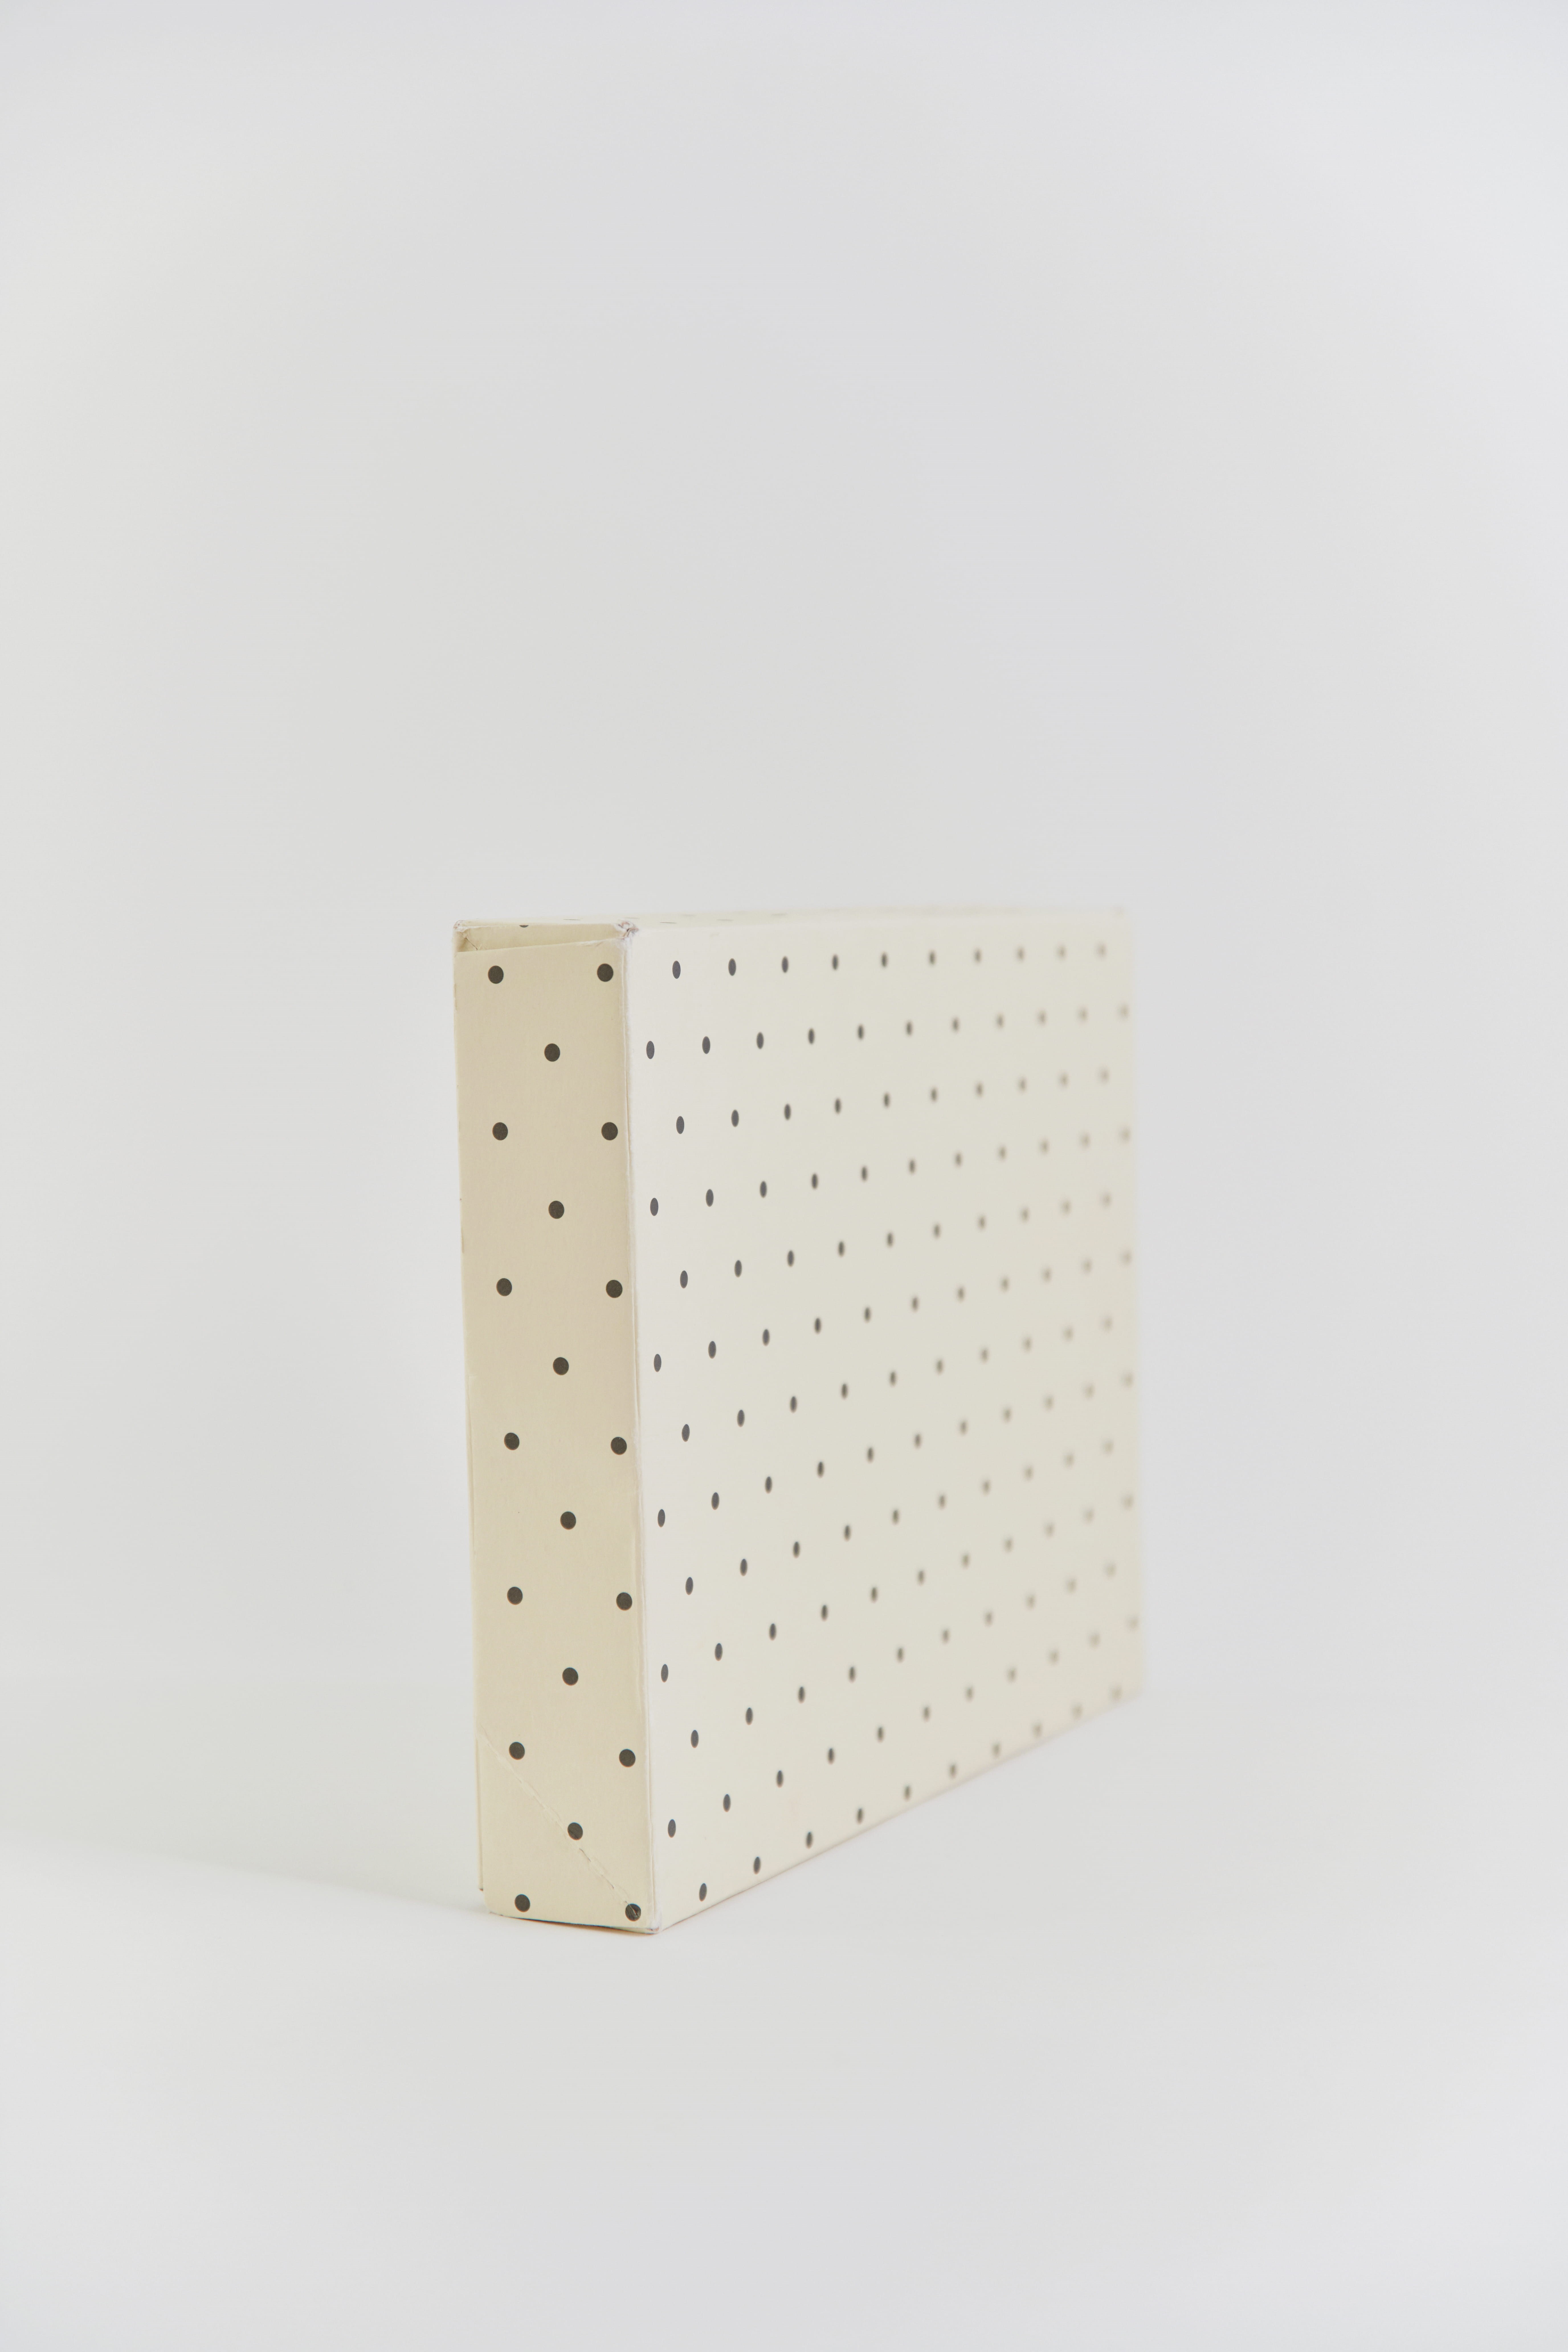 Moshi Moshi web packaging in corrugated cardboard